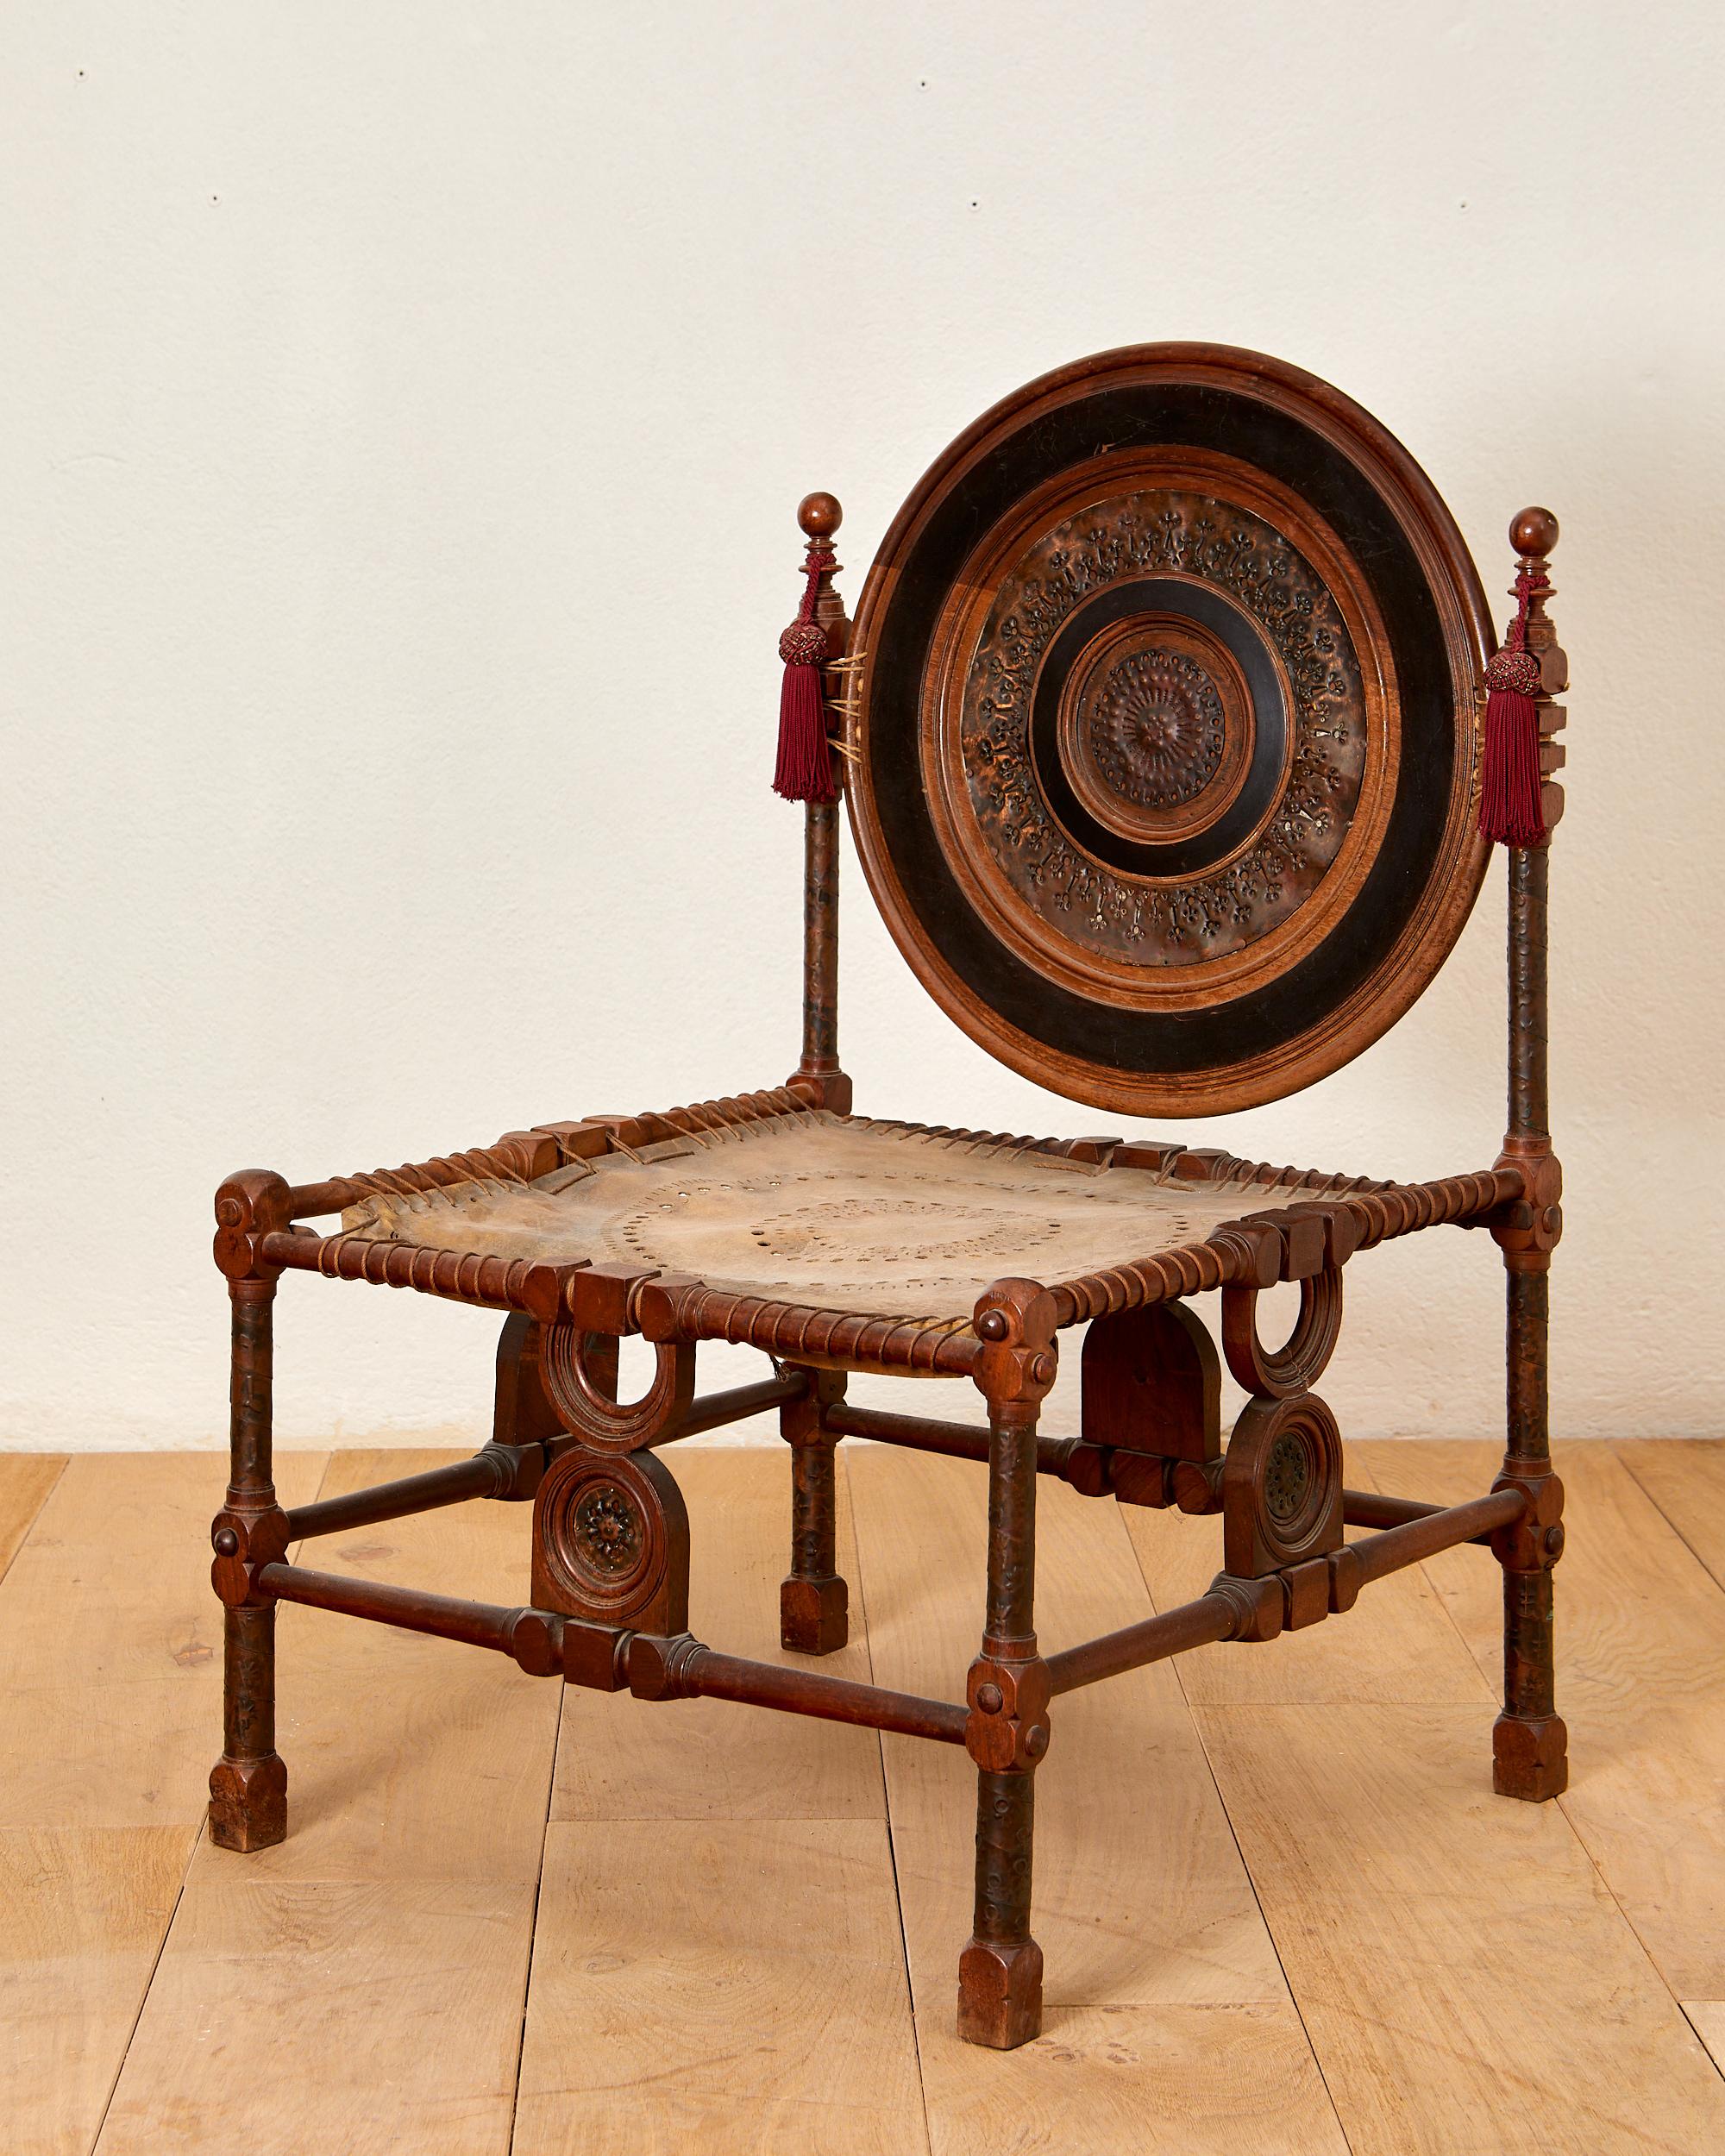 Early 20th Century Carlo Bugatti (1856-1940), chair, wood, parchment and copper, circa 1900, Italy.